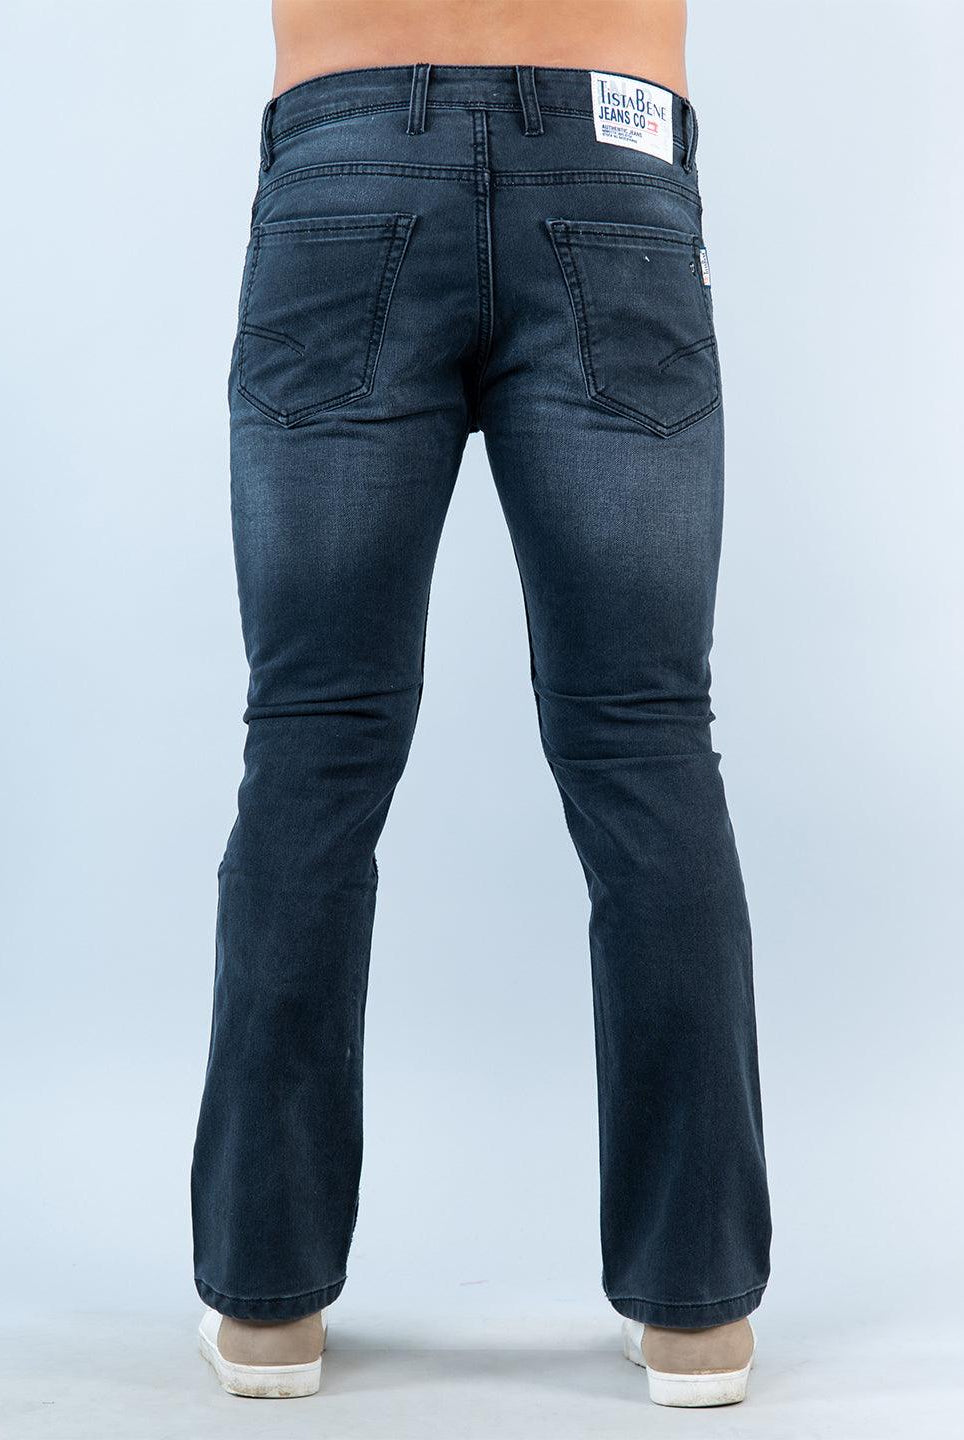 Grey Boot-cut Men's Jeans